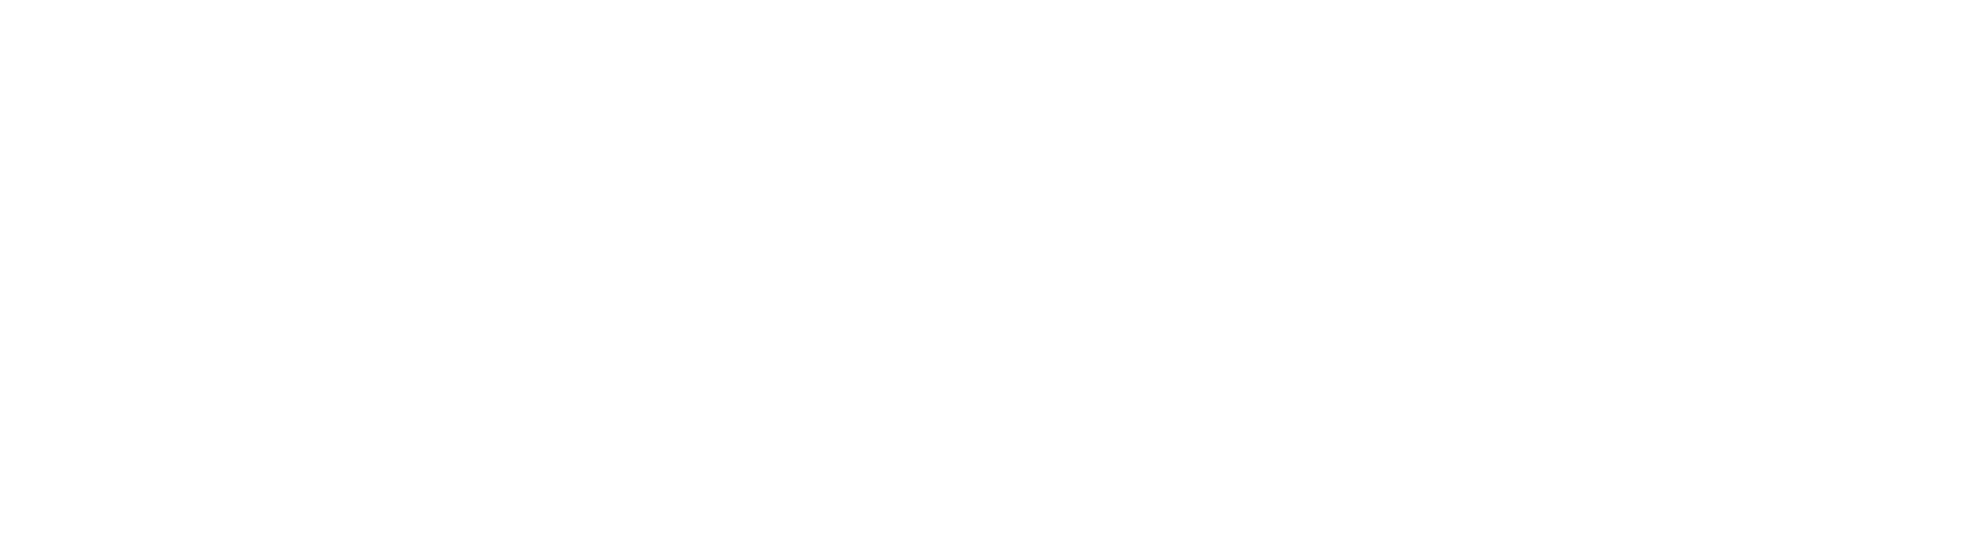 Hall 5 Logo